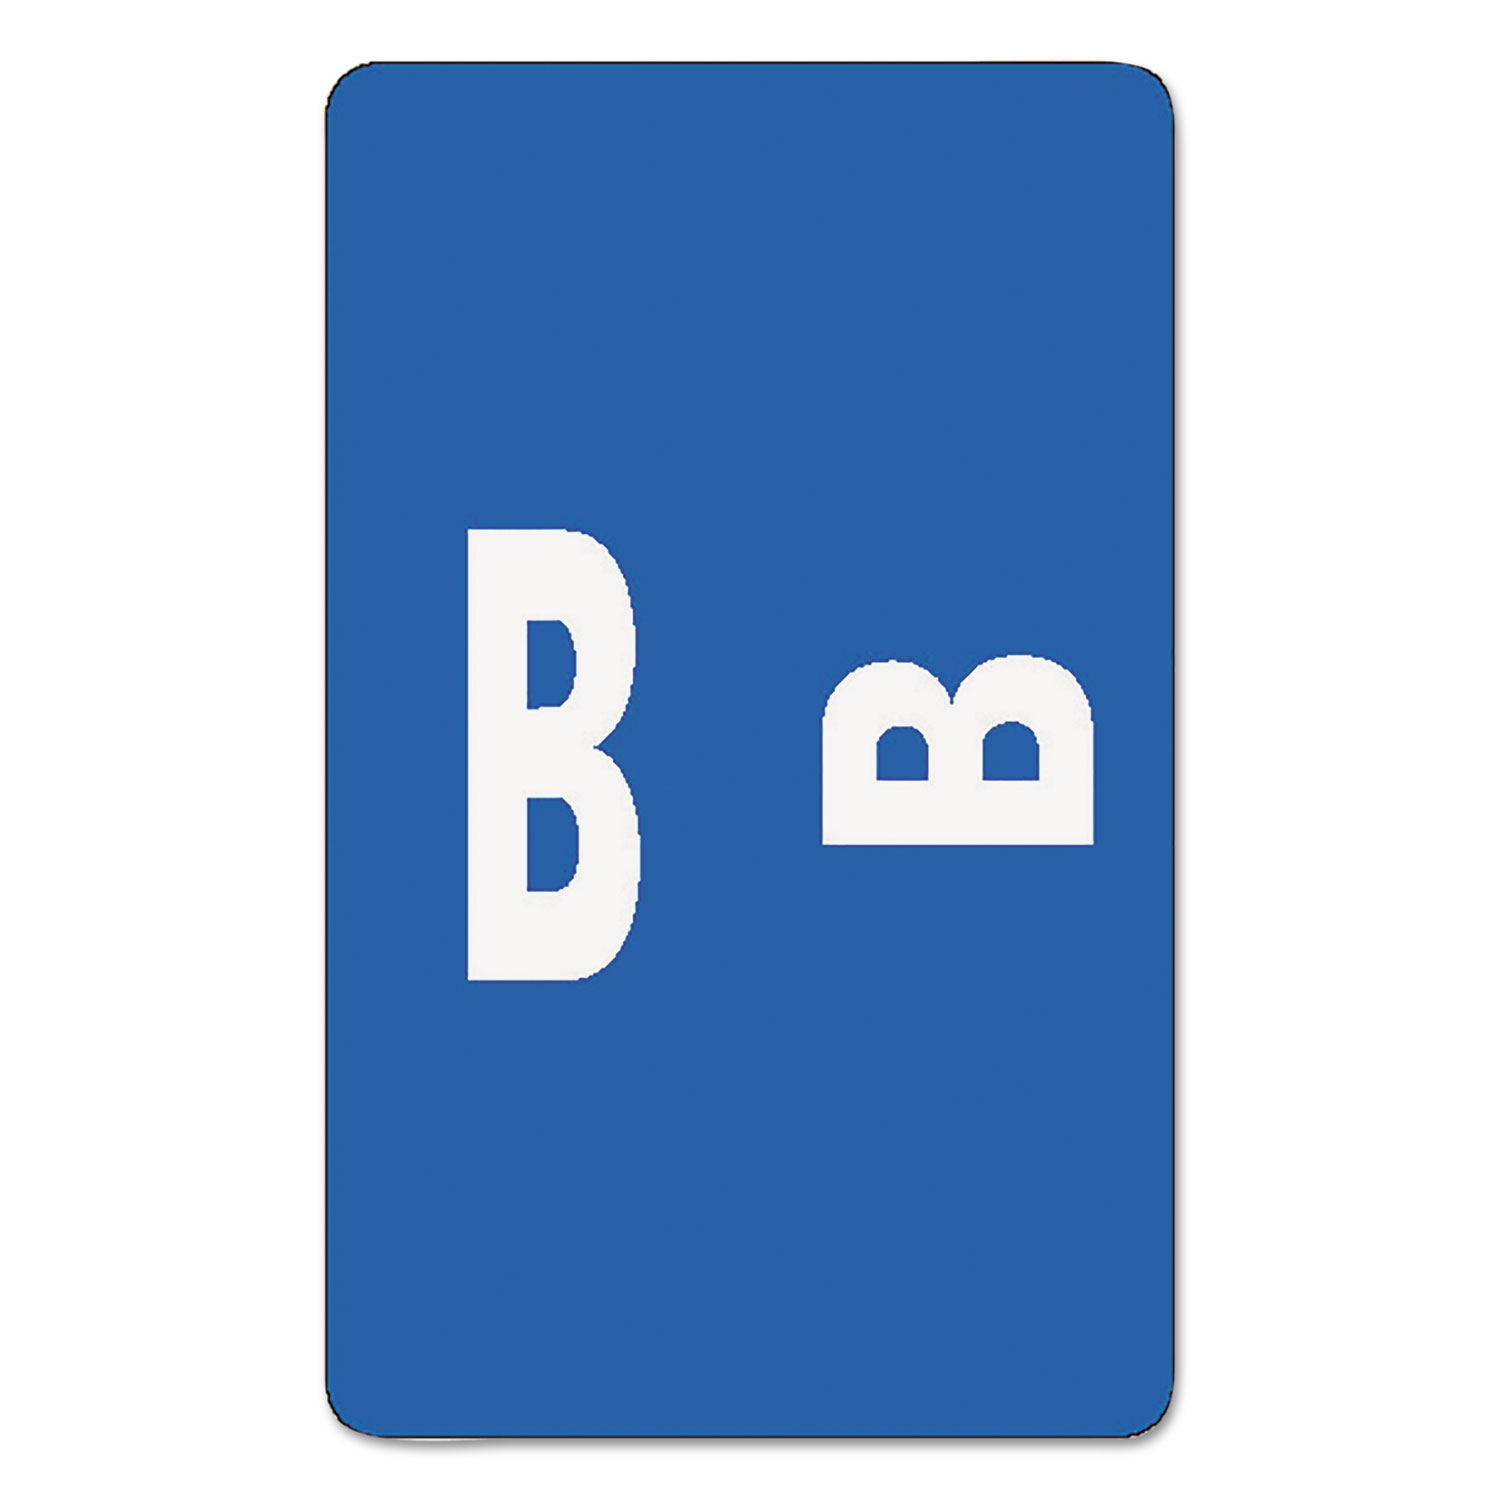  Smead 67172 AlphaZ Color-Coded Second Letter Alphabetical Labels, B, 1 x 1.63, Dark Blue, 10/Sheet, 10 Sheets/Pack (SMD67172) 